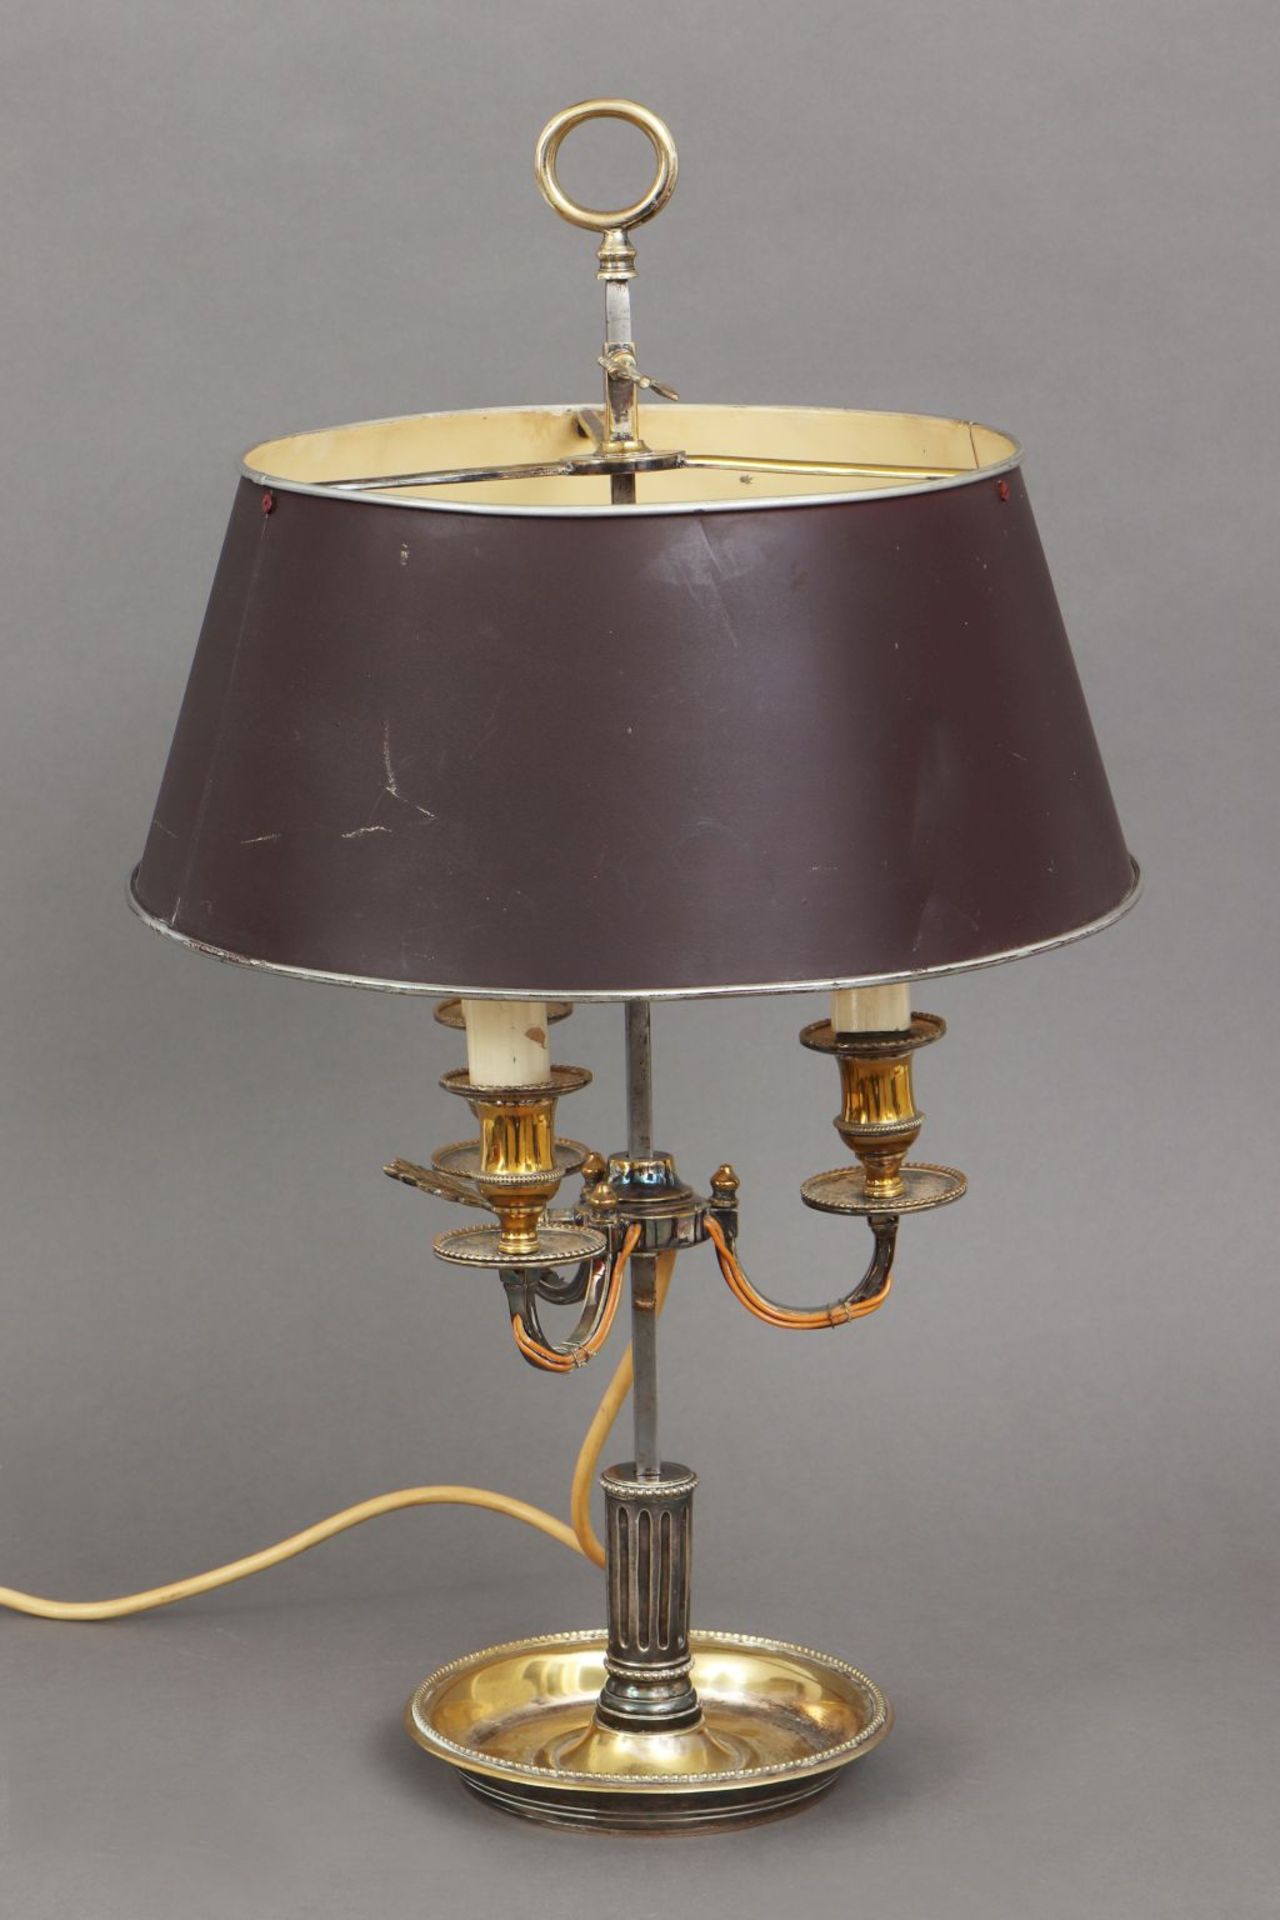 Bouillotte Tischlampe im Stile des EmpireMessing, versilbert, 1. Hälfte 20. Jhdt., 3 geschwung